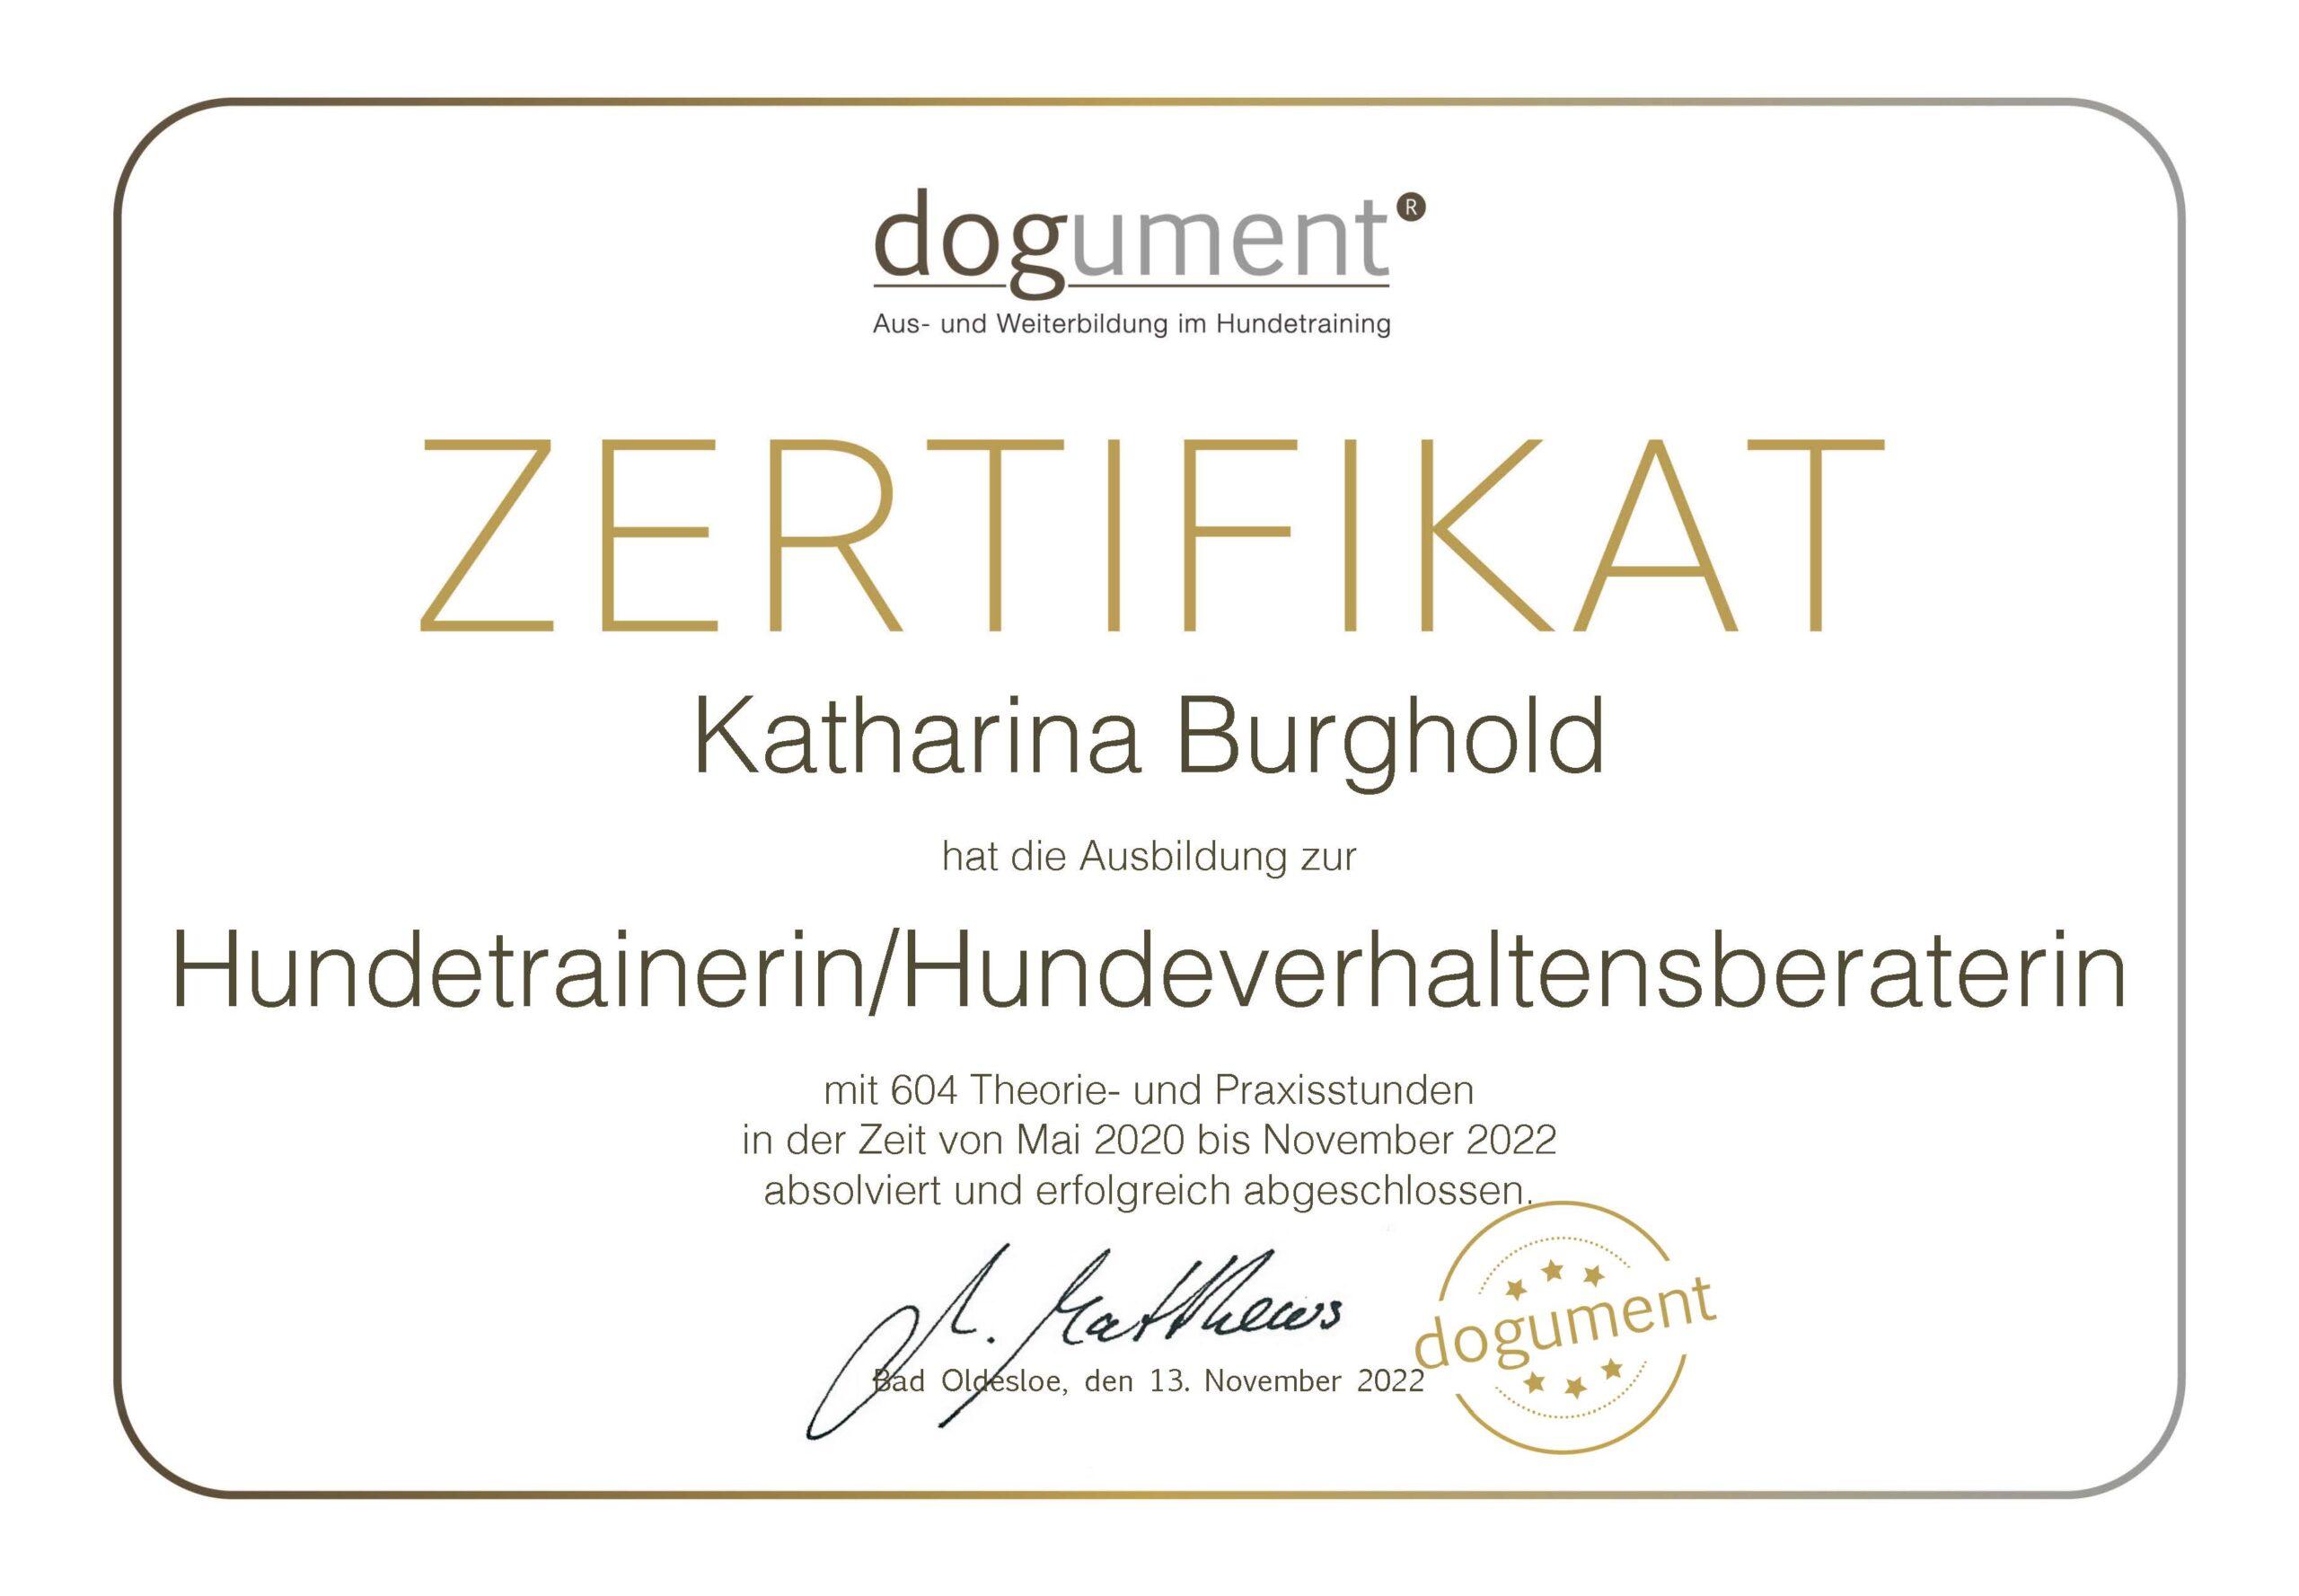 Zertifikat-Katharina-Burghold-dogument